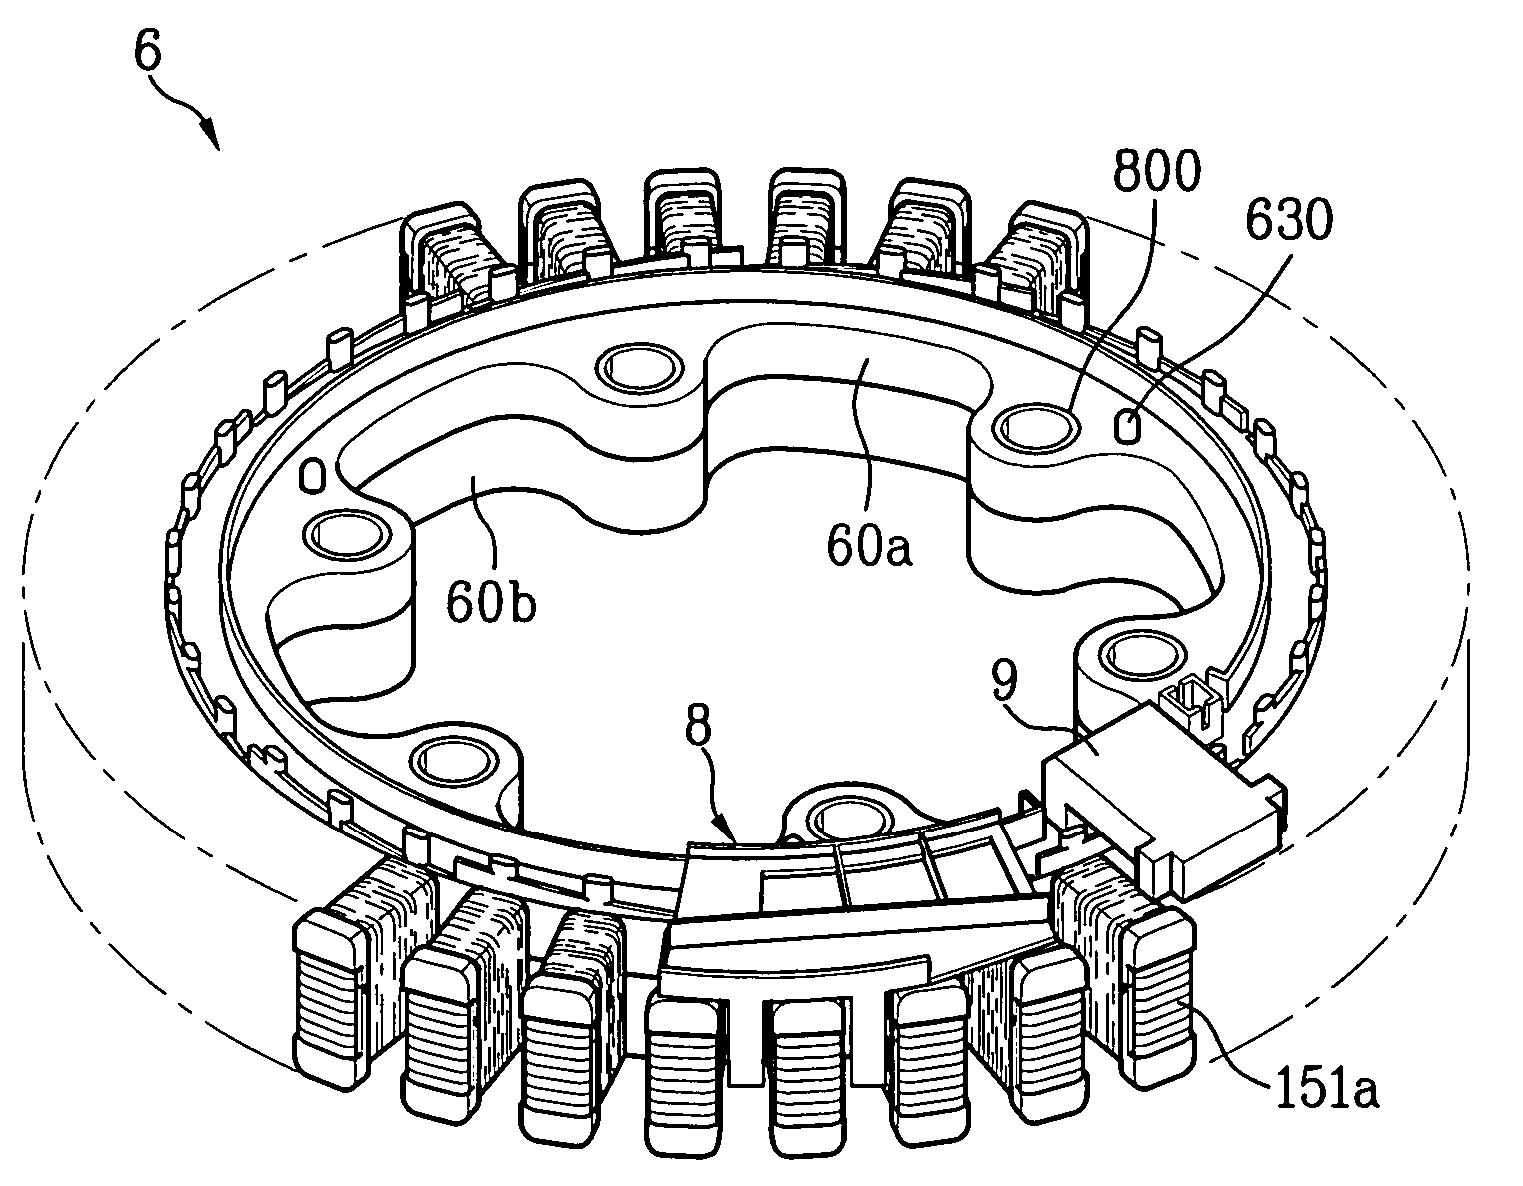 Stator of outer rotor type motor for drum type washing machine